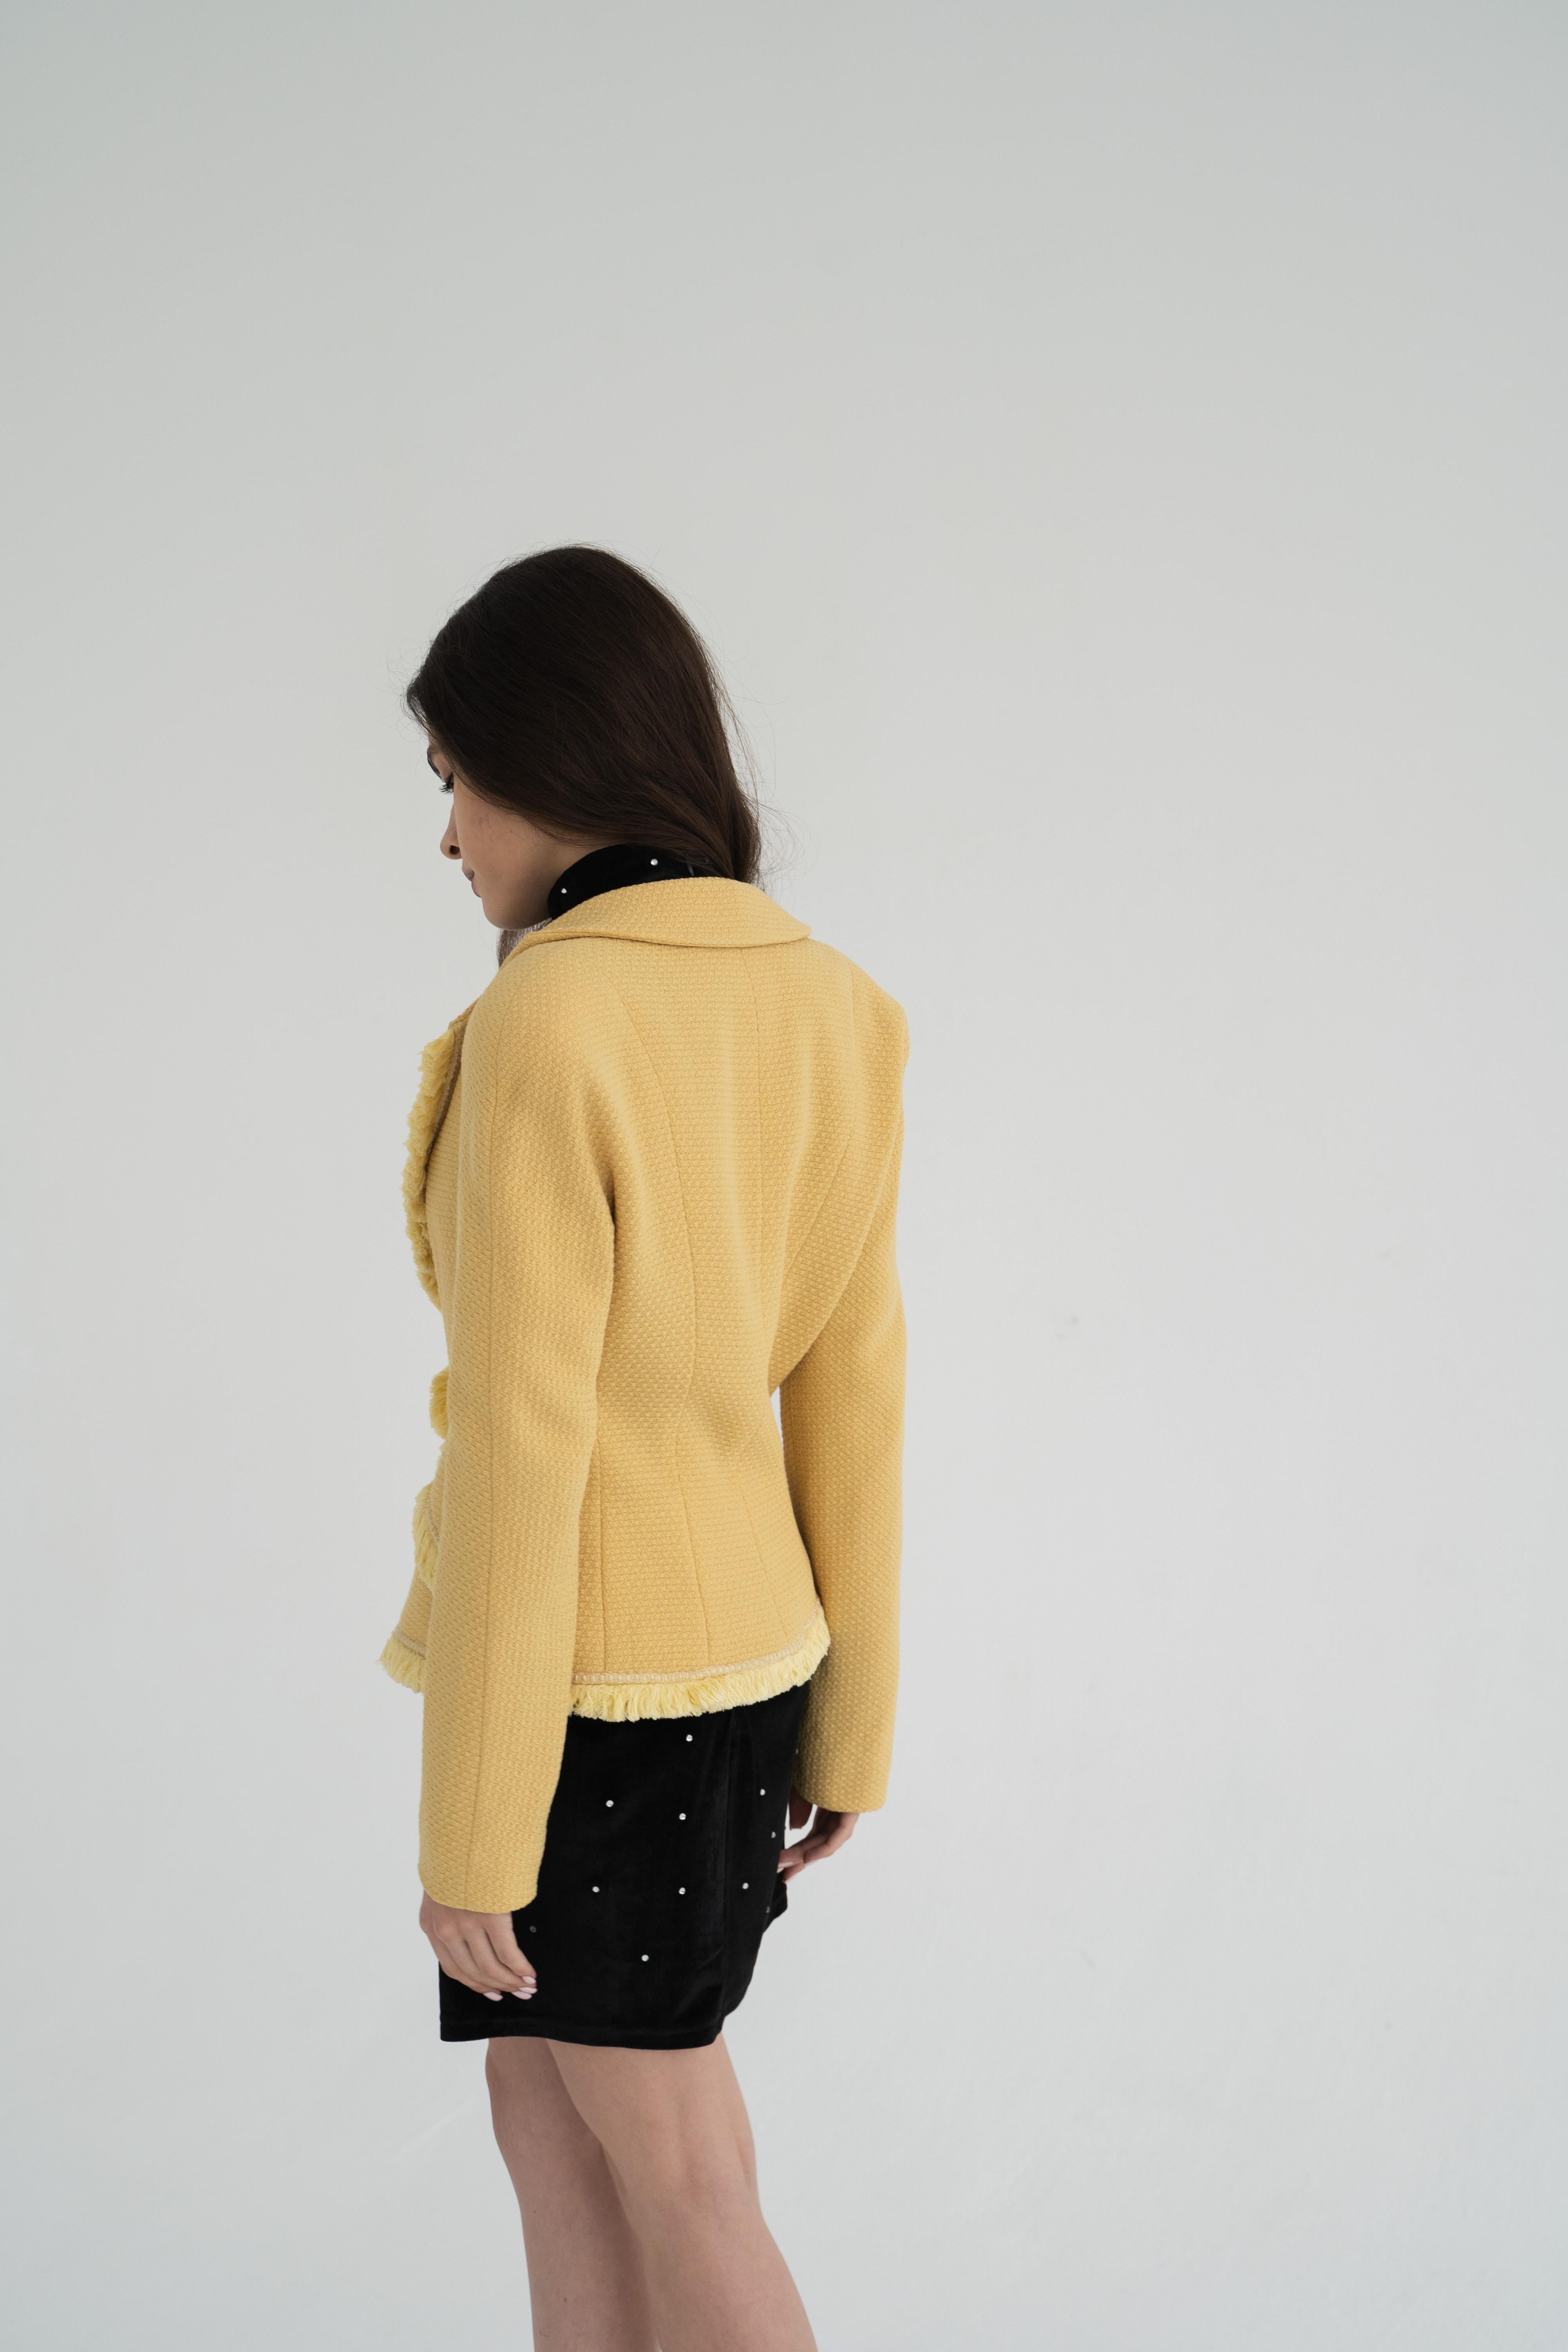 Christian Dior & John Galliano 1997 Geisha / Pin-up Yellow Wool Tweed Jacket For Sale 4